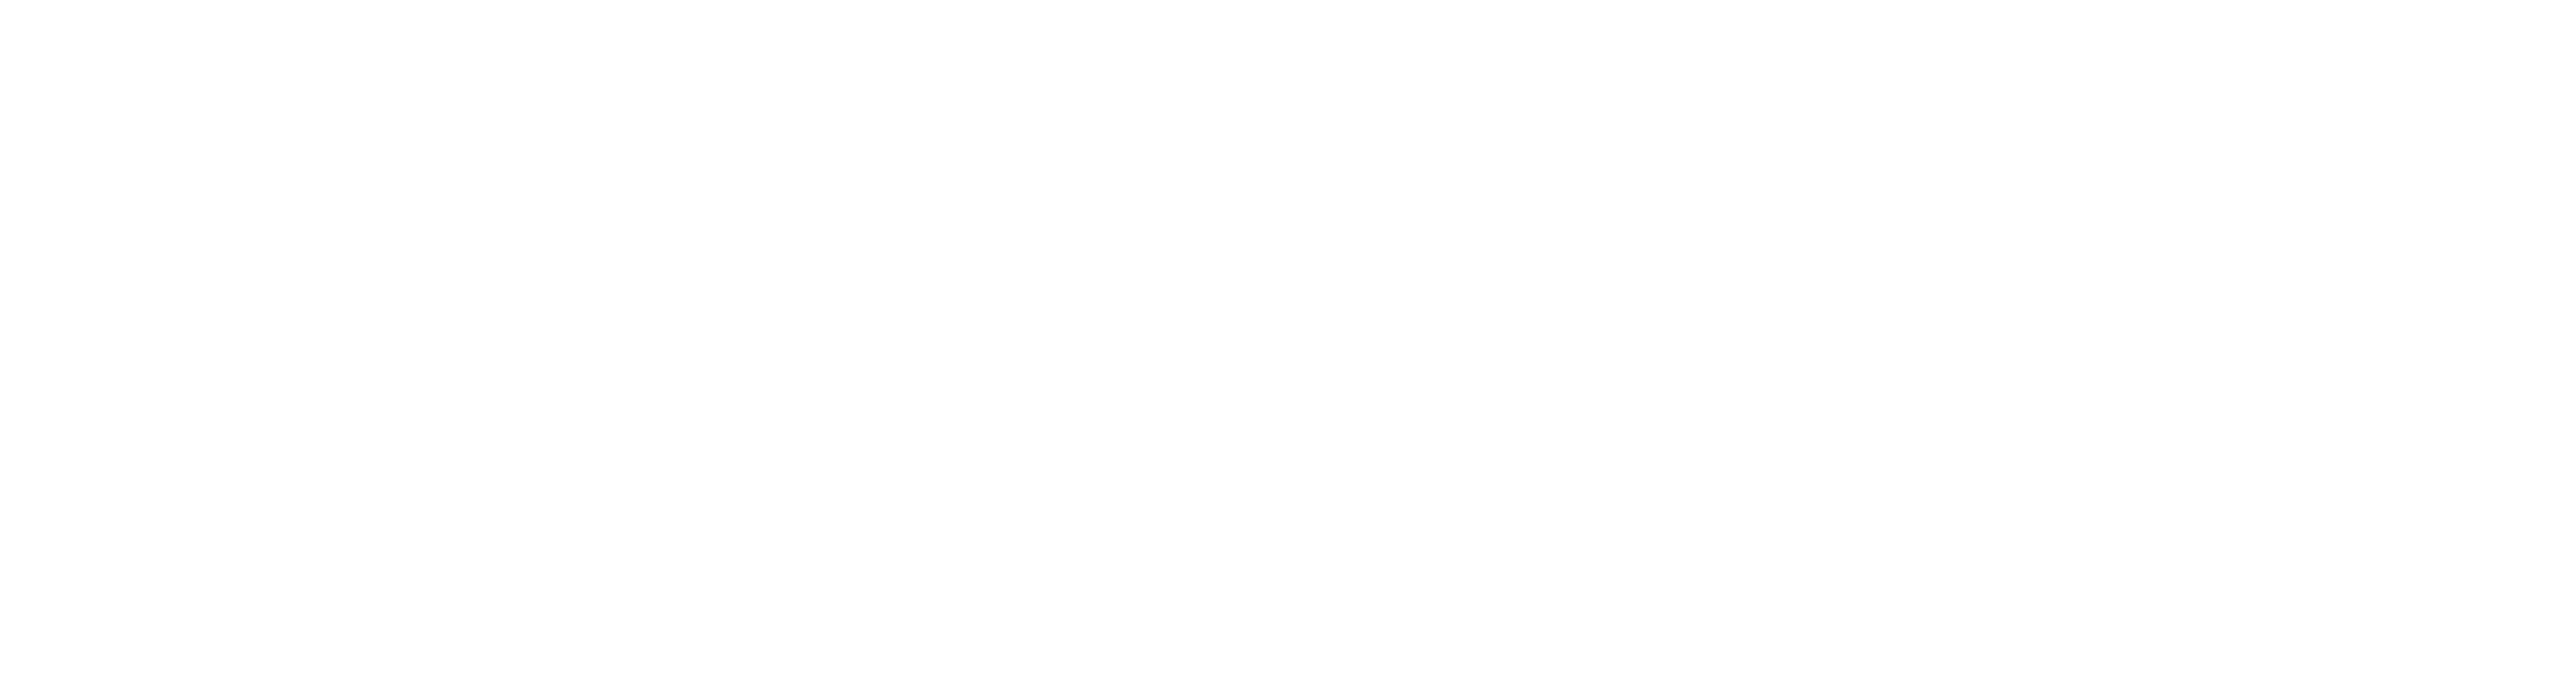 Blackstone Brickwork